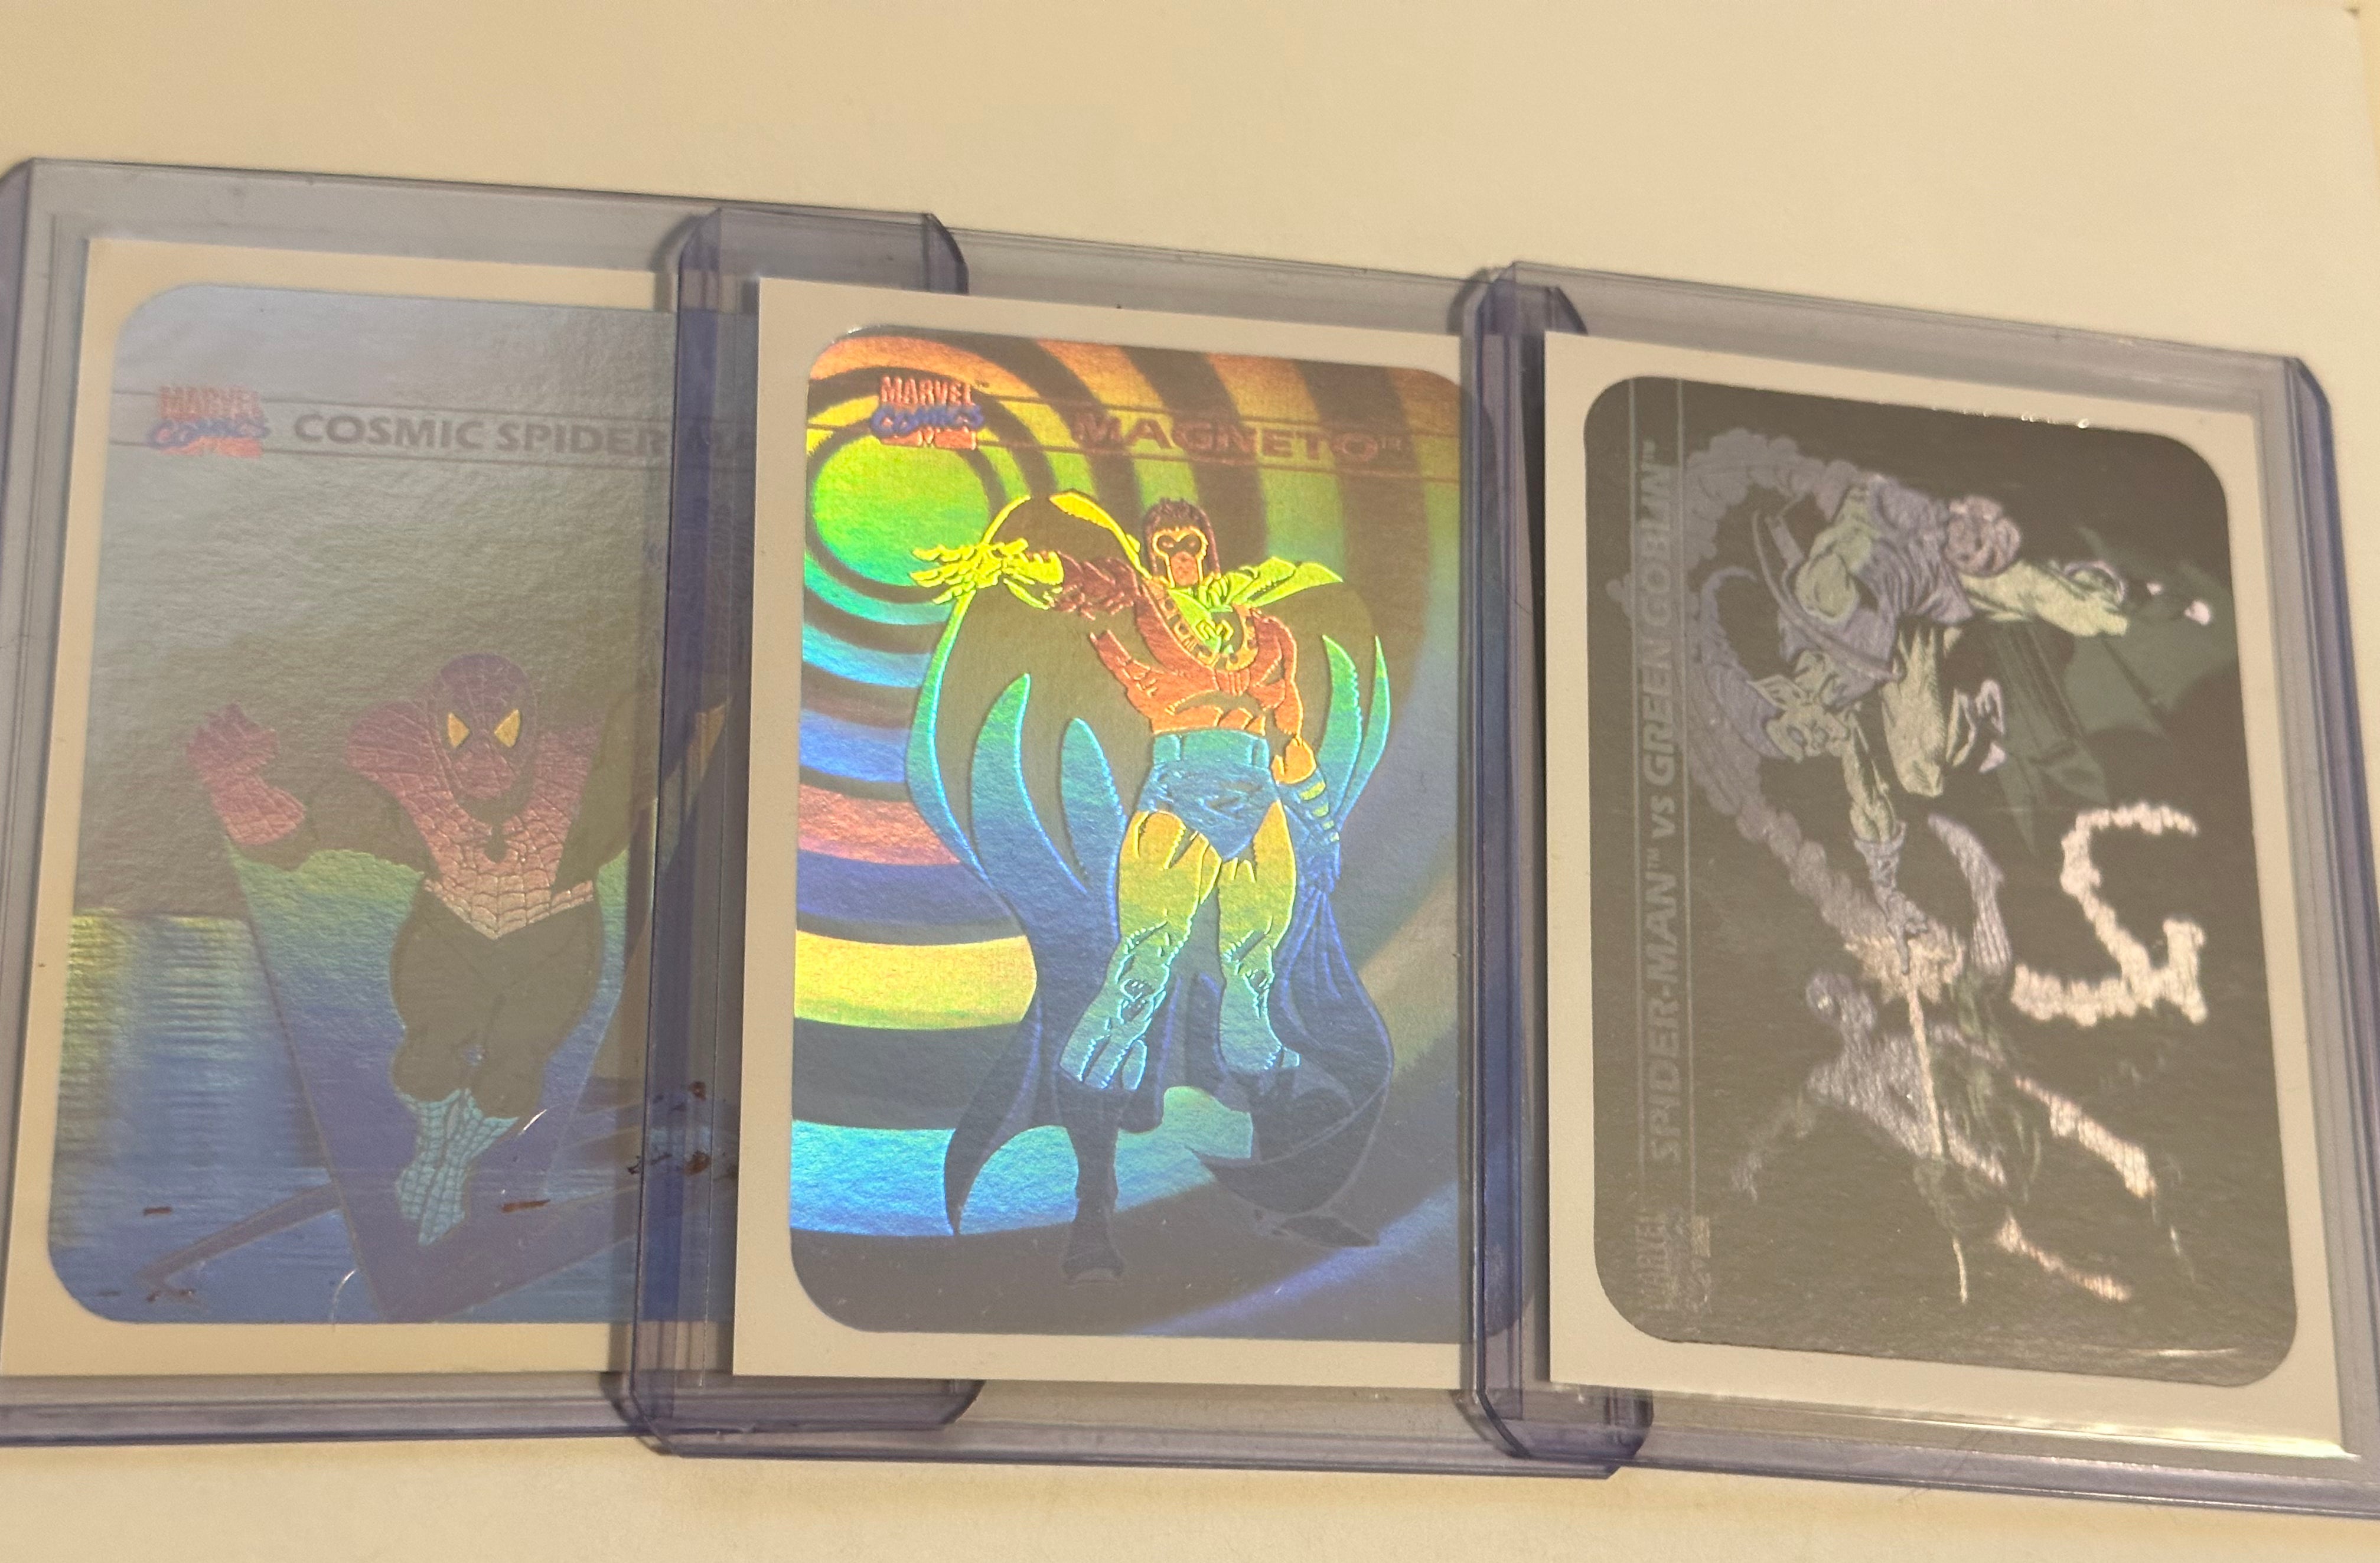 Marvel Universe first series rare 5 cards hologram insert cards set 1990